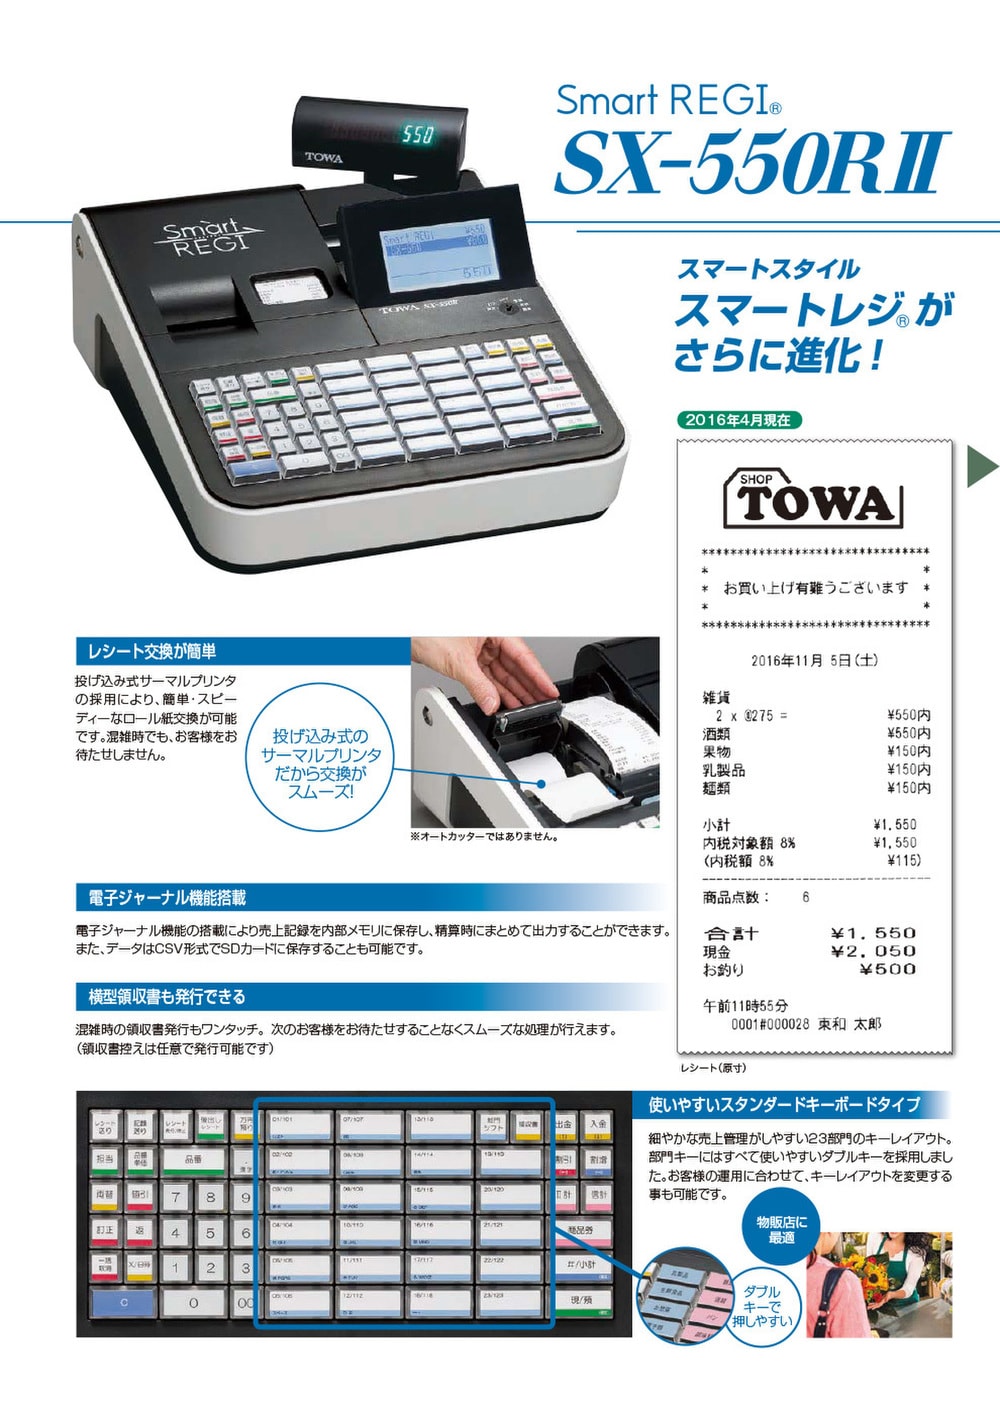 2/2 SX-550R スマートレジスター TOWA SDカード スマホ-